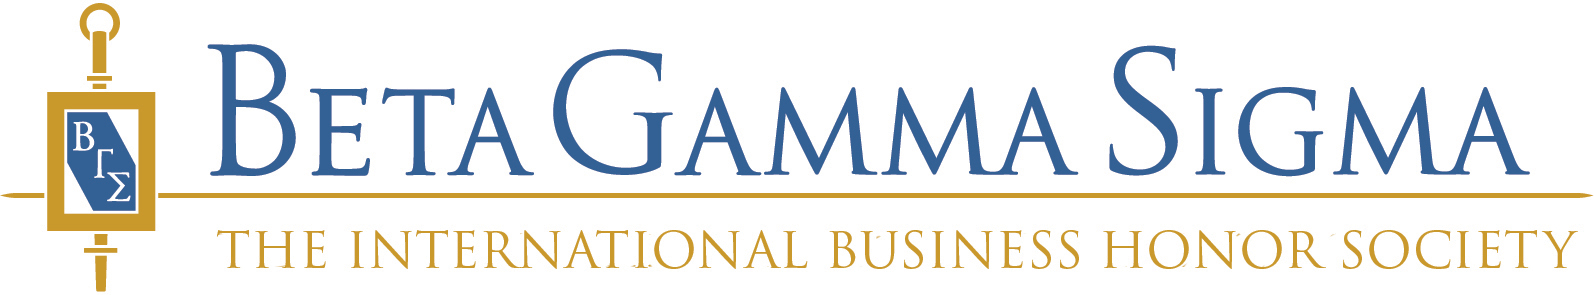 Beta Gamma Sigma, The International Business Honor Society logo